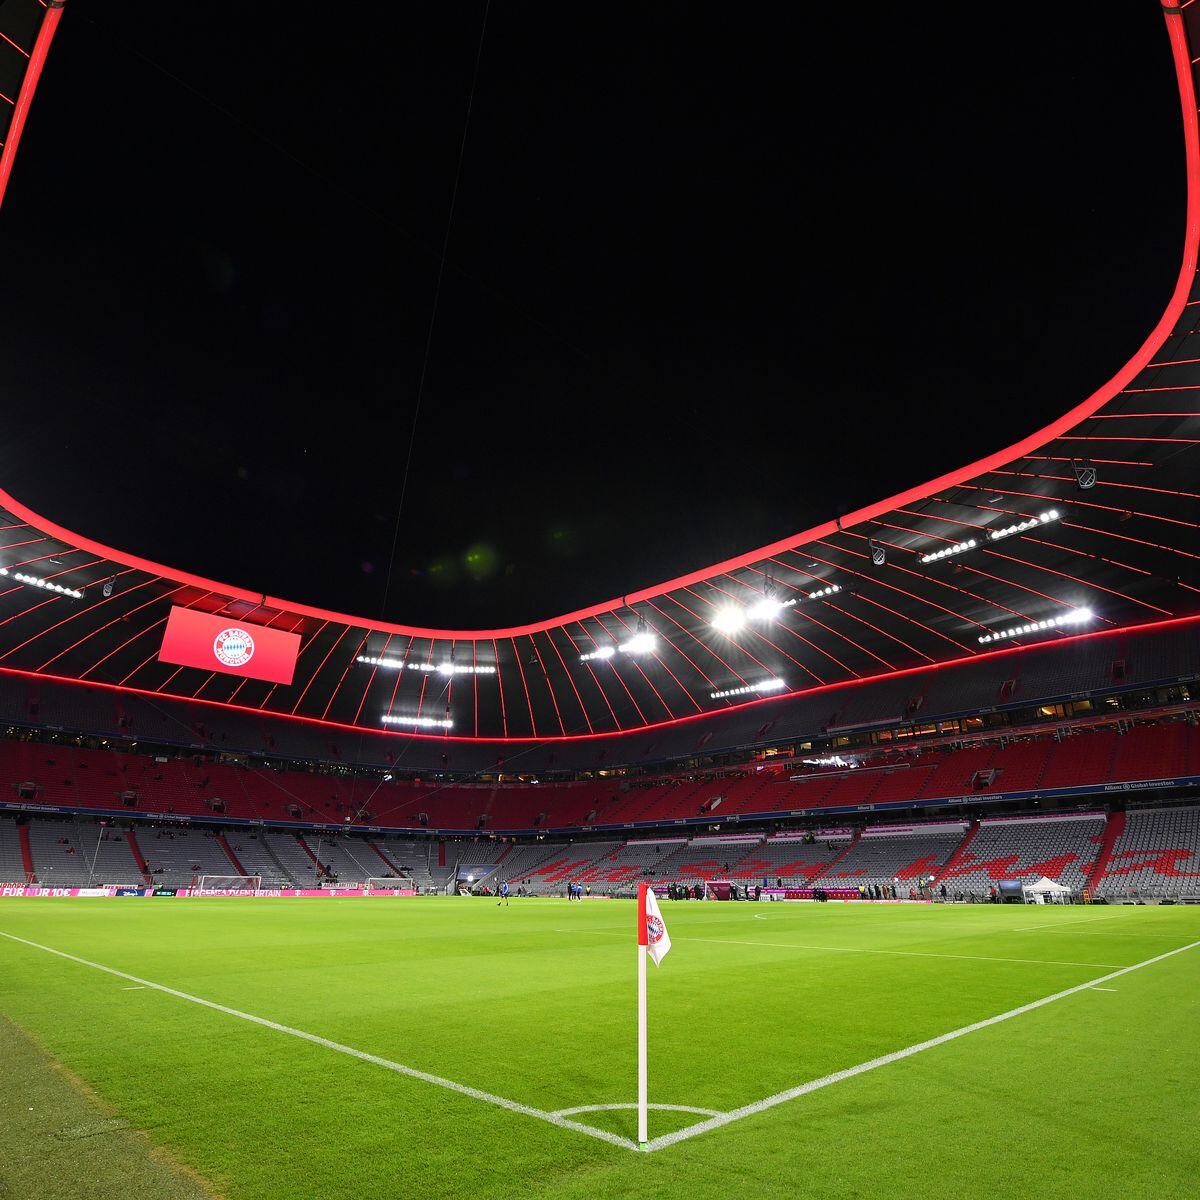 We open the 2022/23 Bundesliga season - FC Bayern München